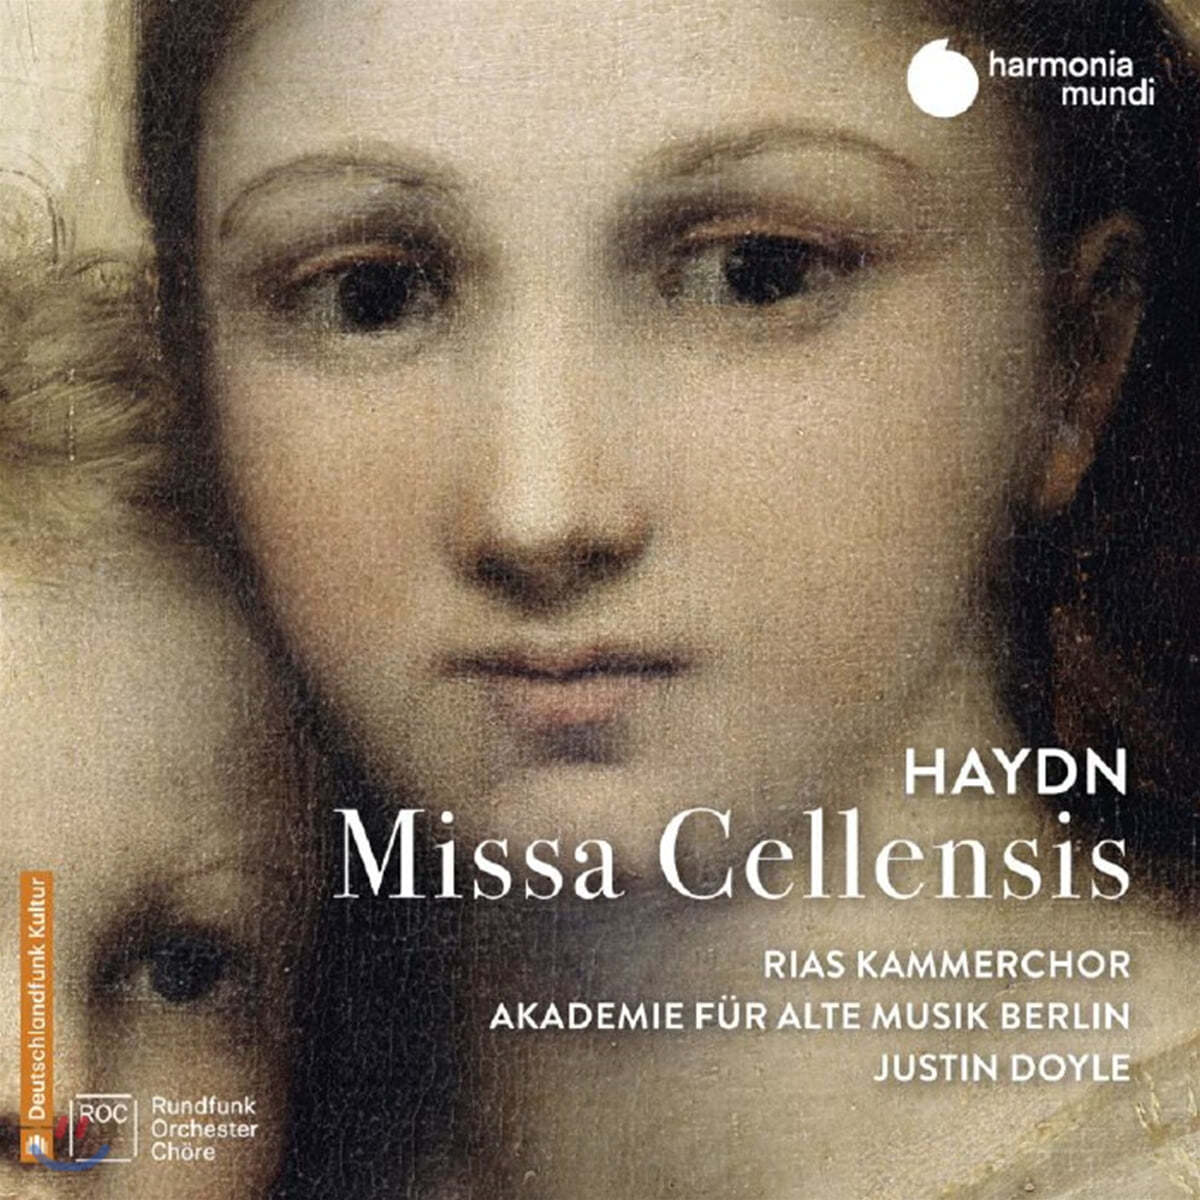 Justin Doyle 하이든: 미사 첼렌시스 (Haydn: Missa Cellensis)